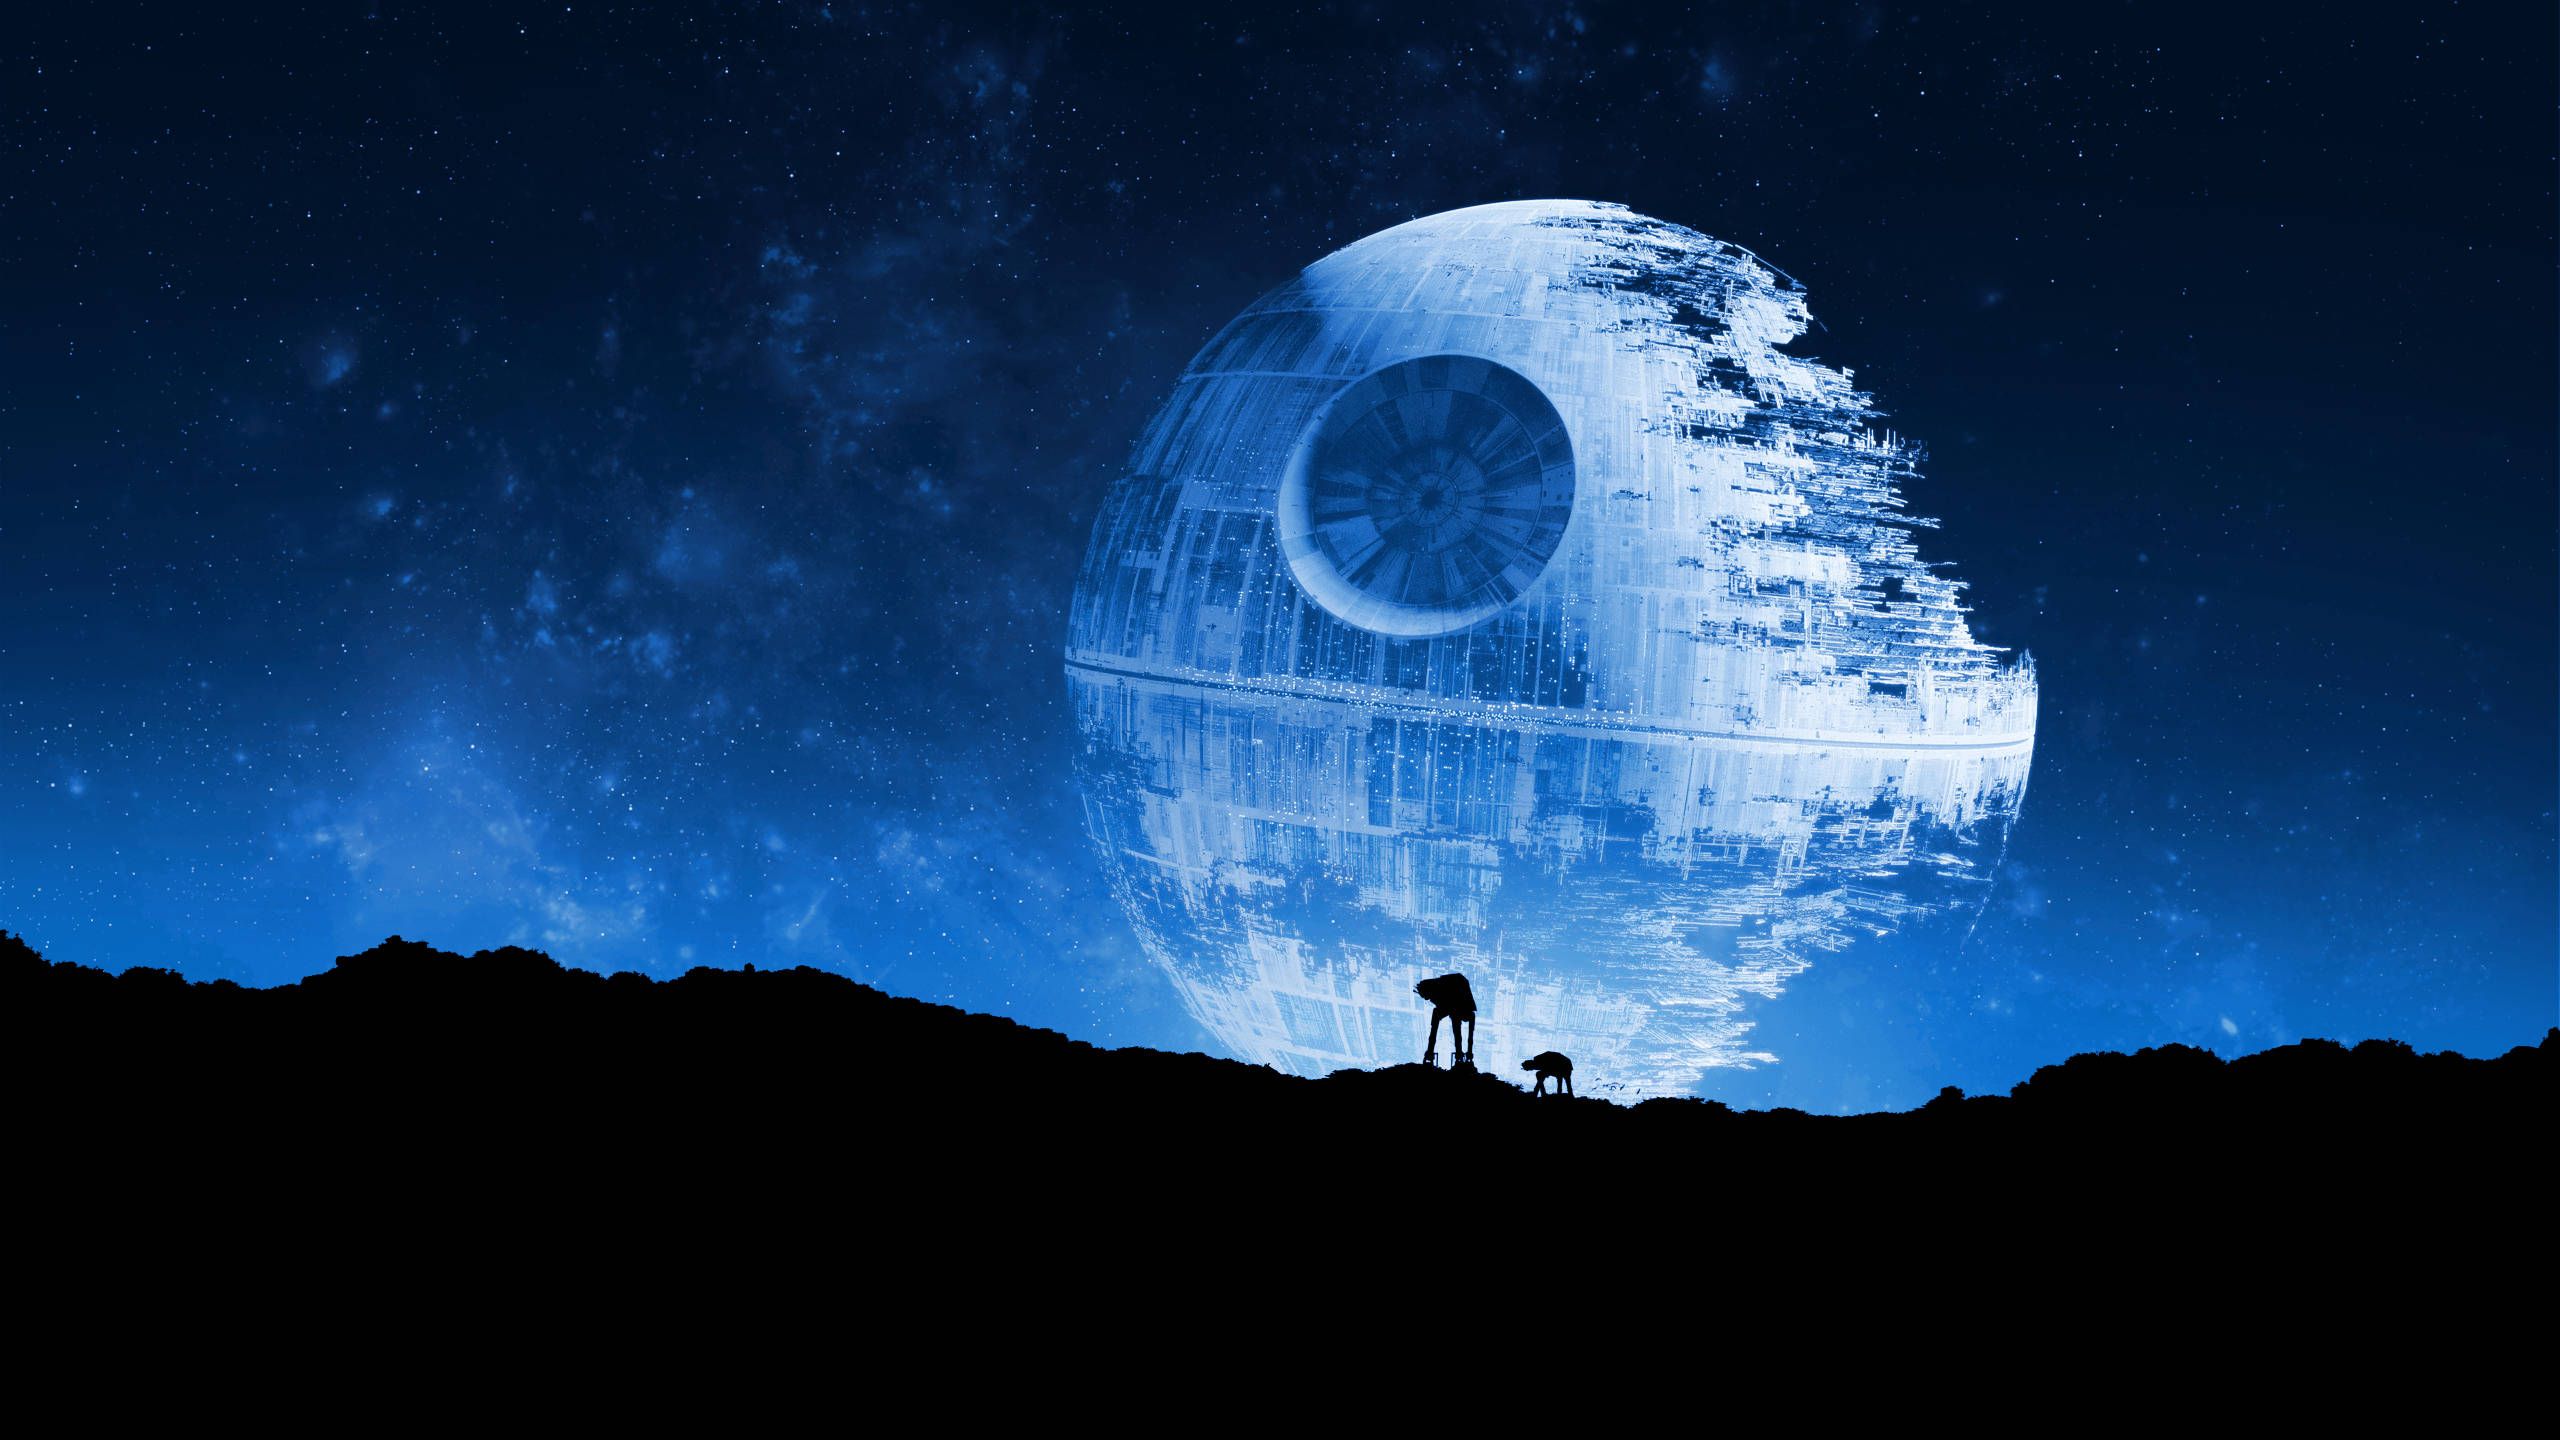 Download Star Wars Death Star Wallpaper